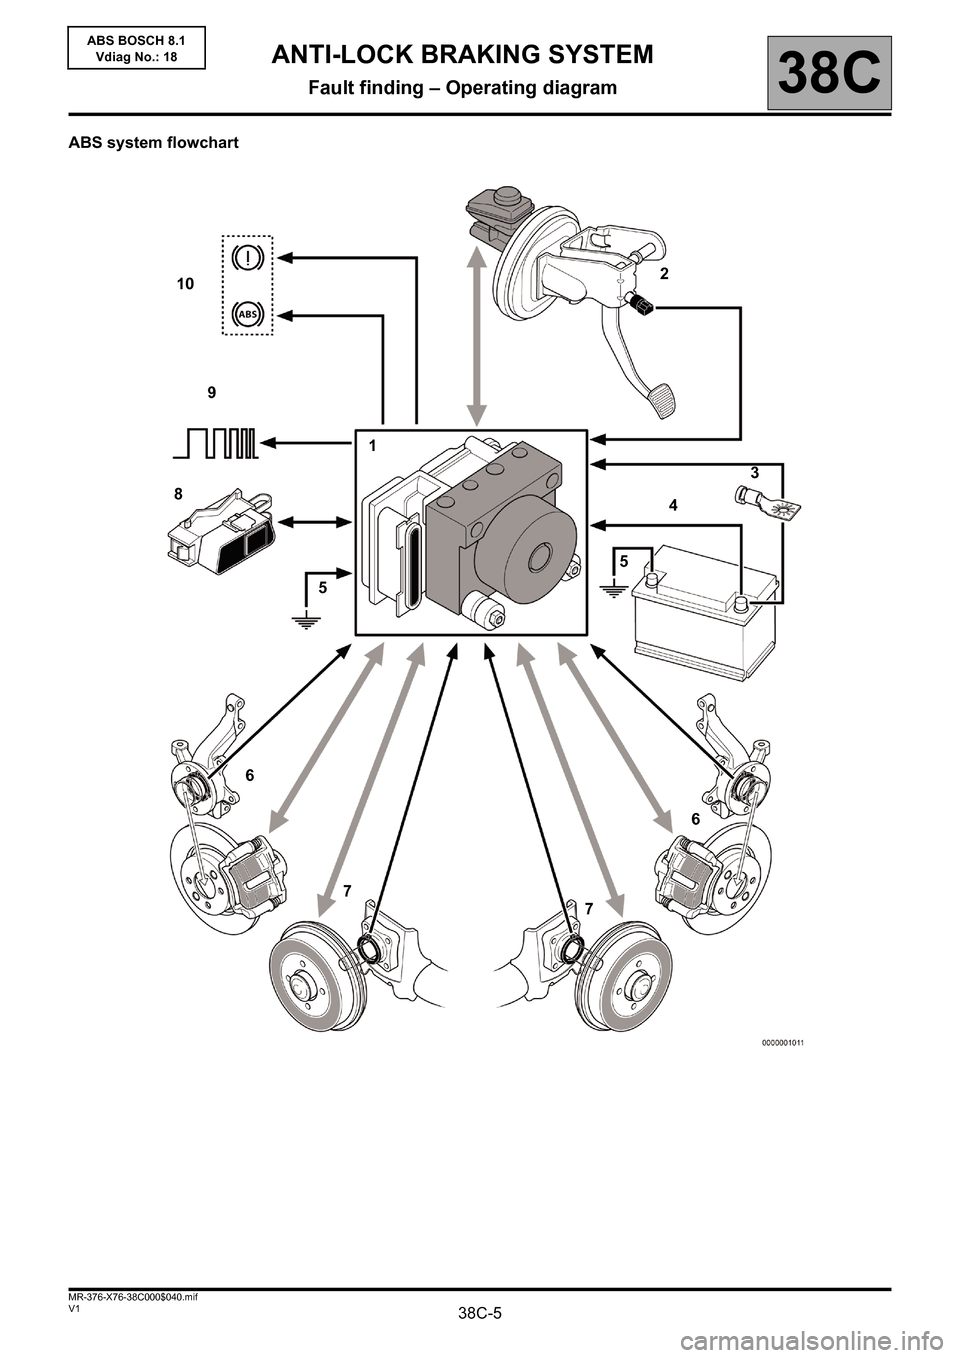 RENAULT KANGOO 2013 X61 / 2.G ABS Bosch 8.1 Workshop Manual 38C-5V1 MR-376-X76-38C000$040.mif
38C
ABS BOSCH 8.1
Vdiag No.: 18
ABS system flowchart
10
9
8
512
3
4
5
6
7 
7 6
ANTI-LOCK BRAKING SYSTEM
Fault finding – Operating diagram 